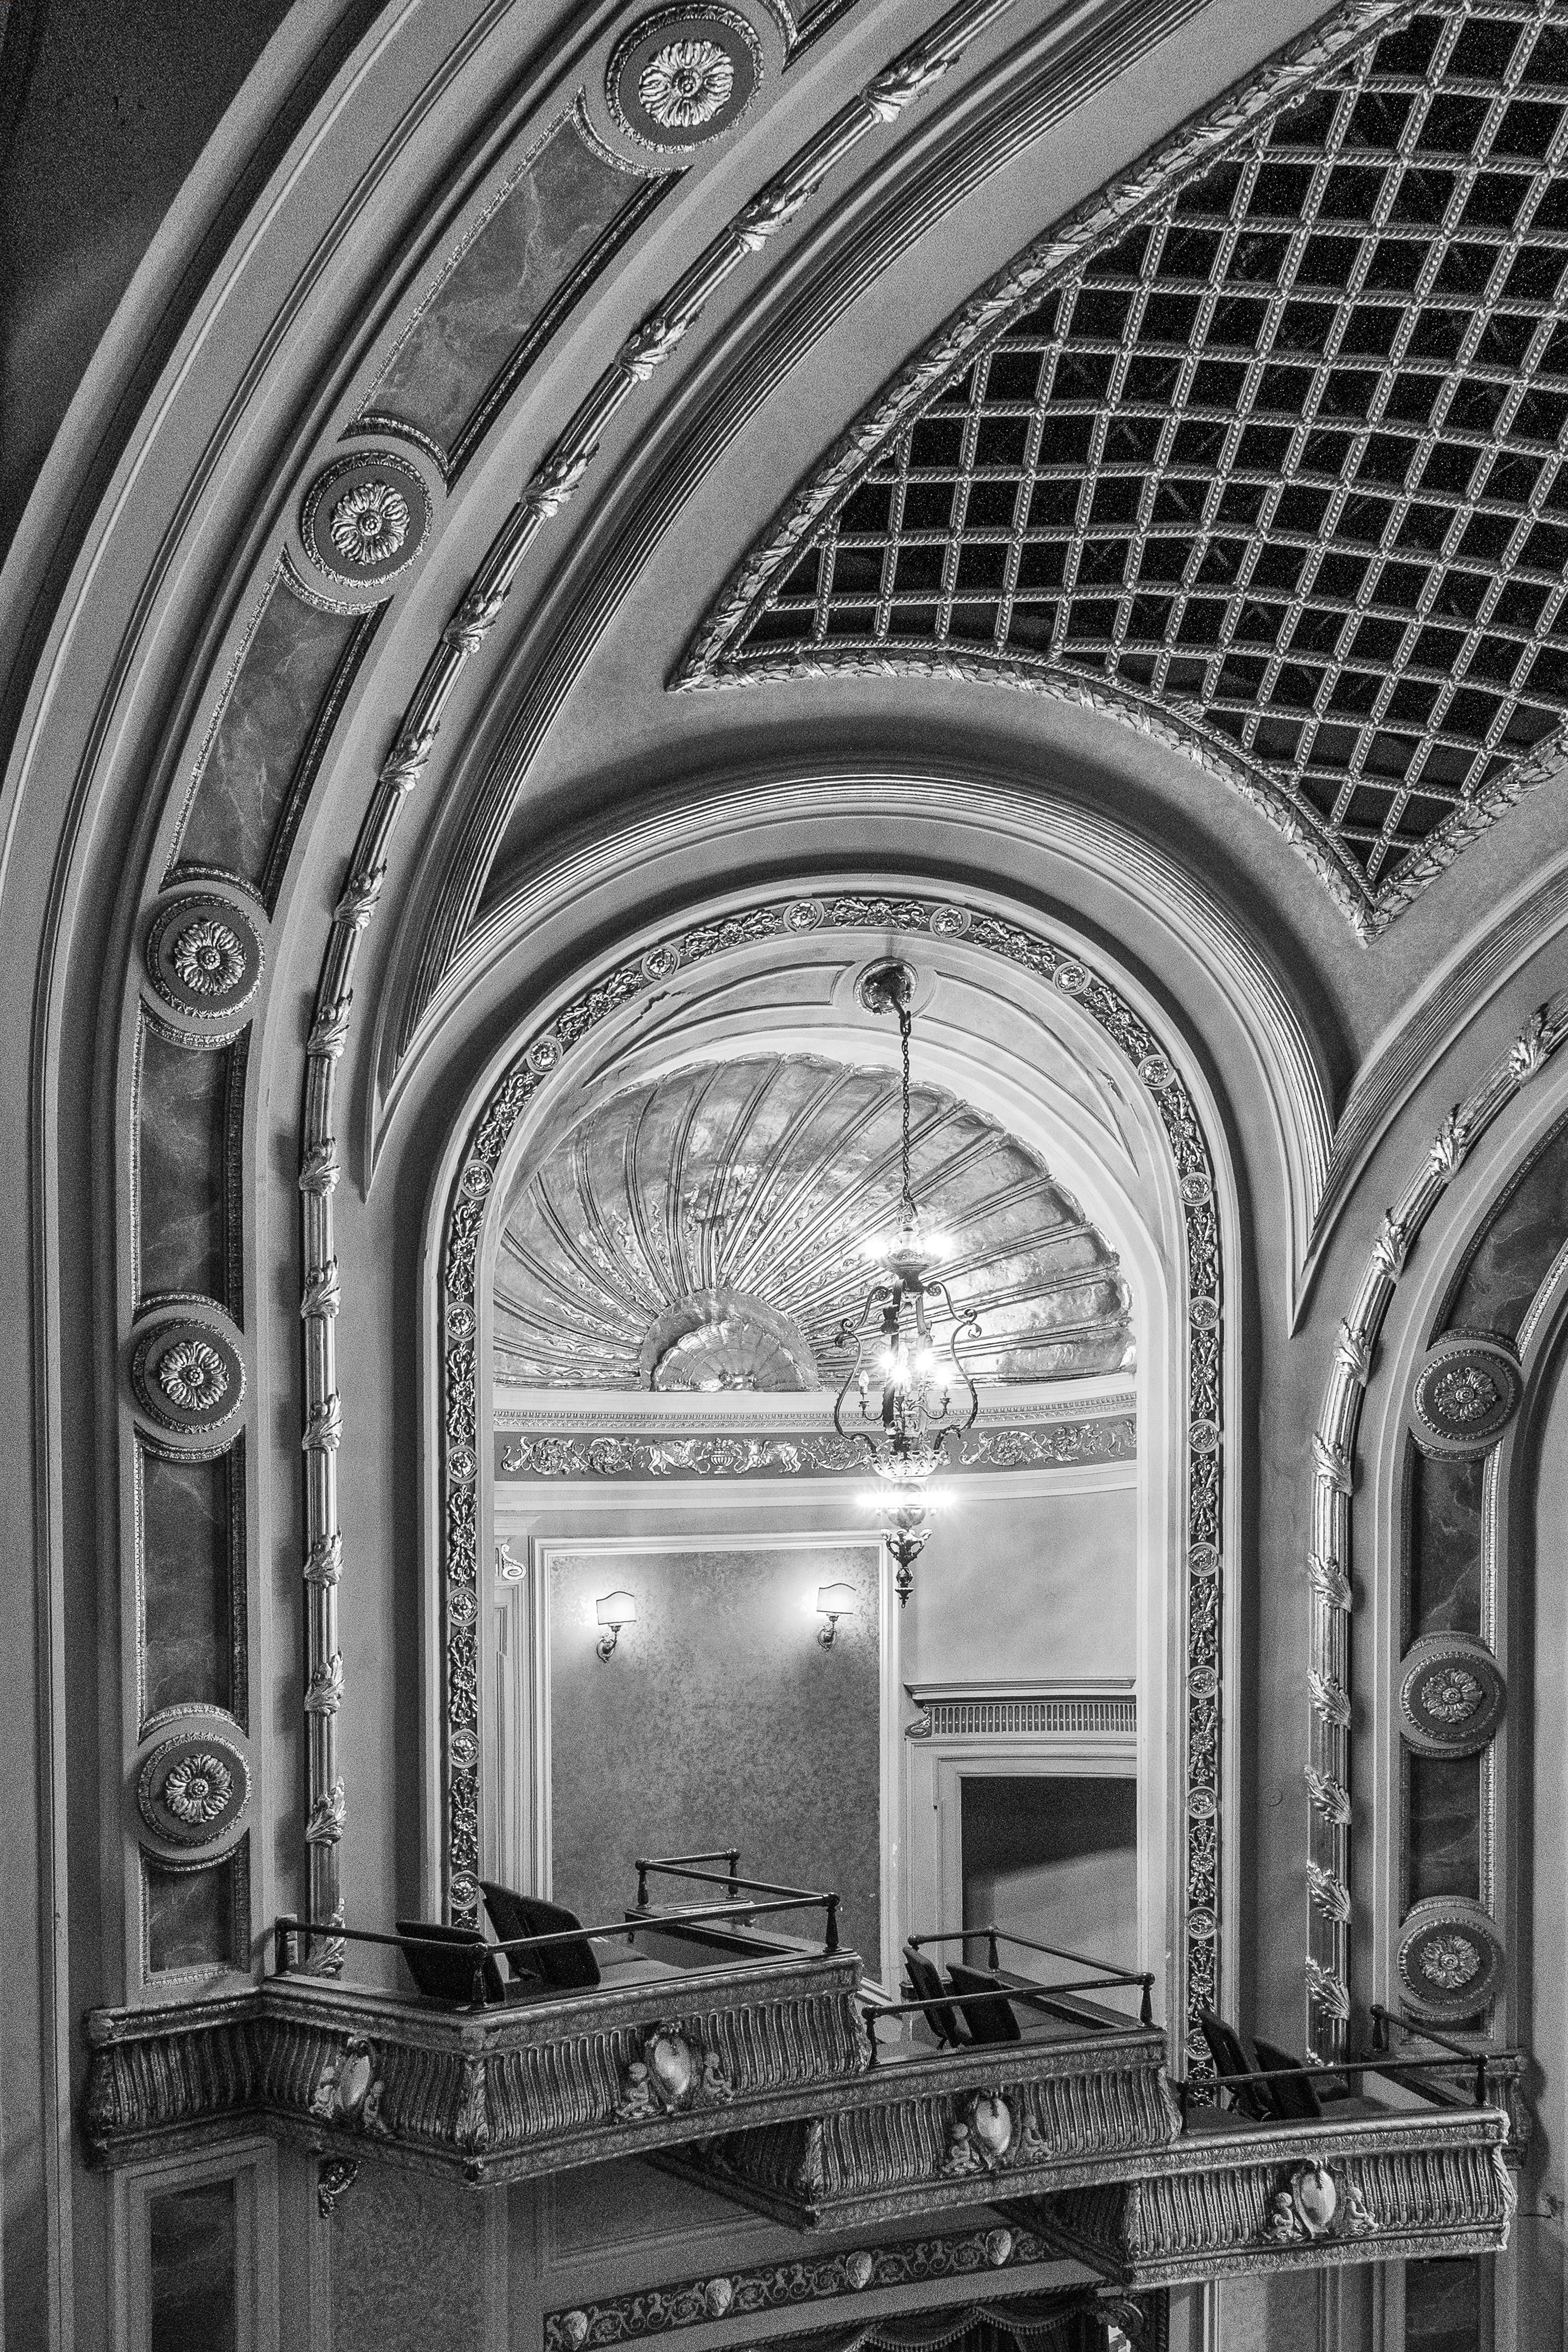 Myrtie Cope Black and White Photograph - "Tivoli Theatre, Loggia" - architectural photography - Ezra Stoller